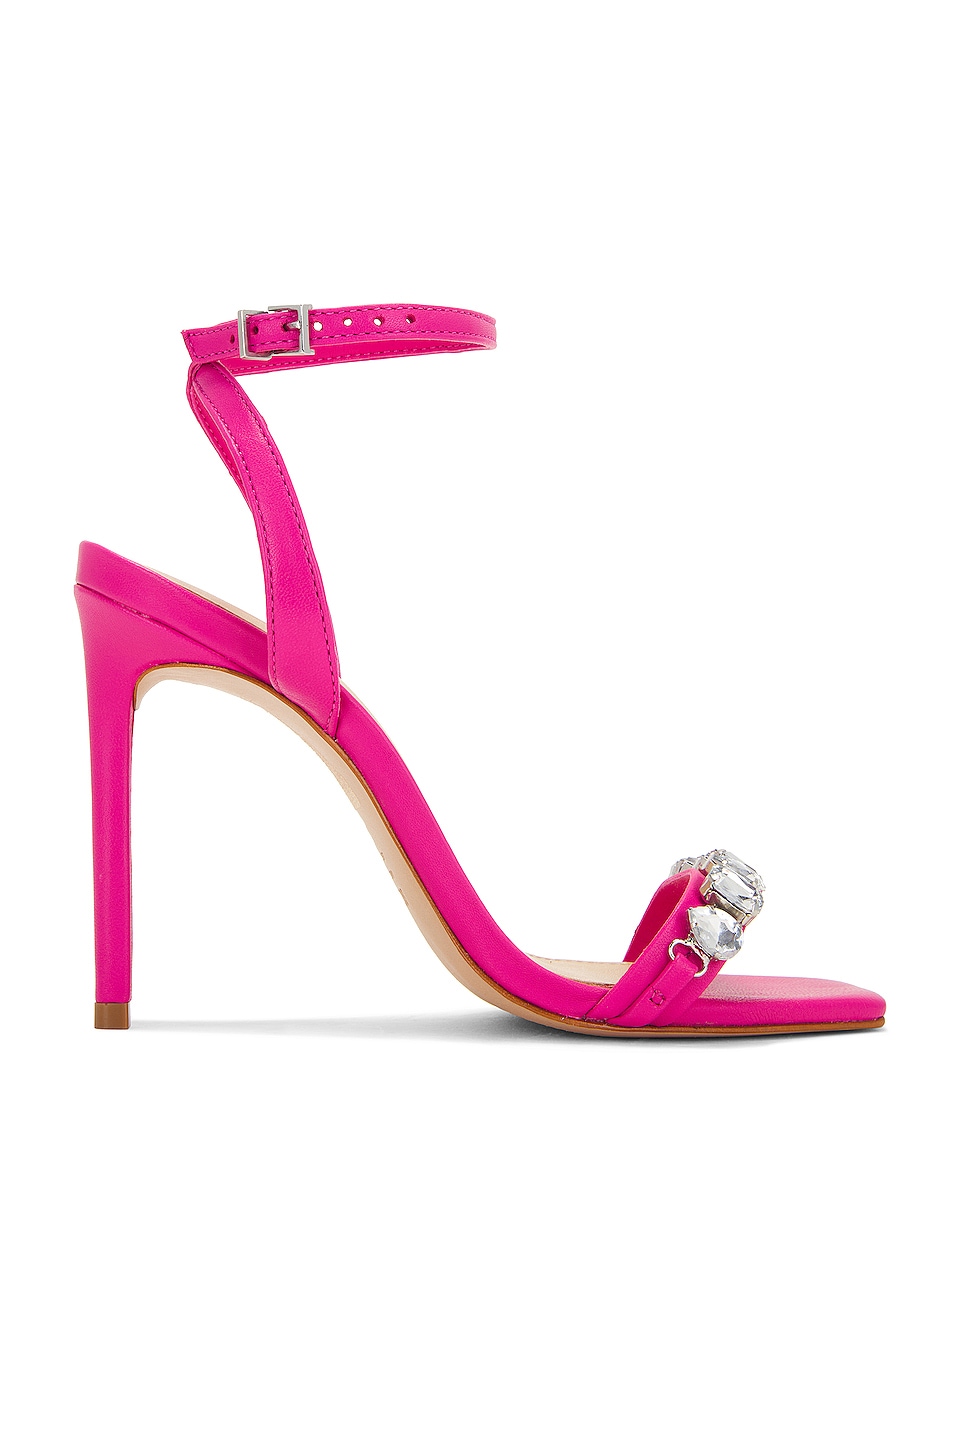 Schutz Lylah Sandal in Paradise Pink | REVOLVE